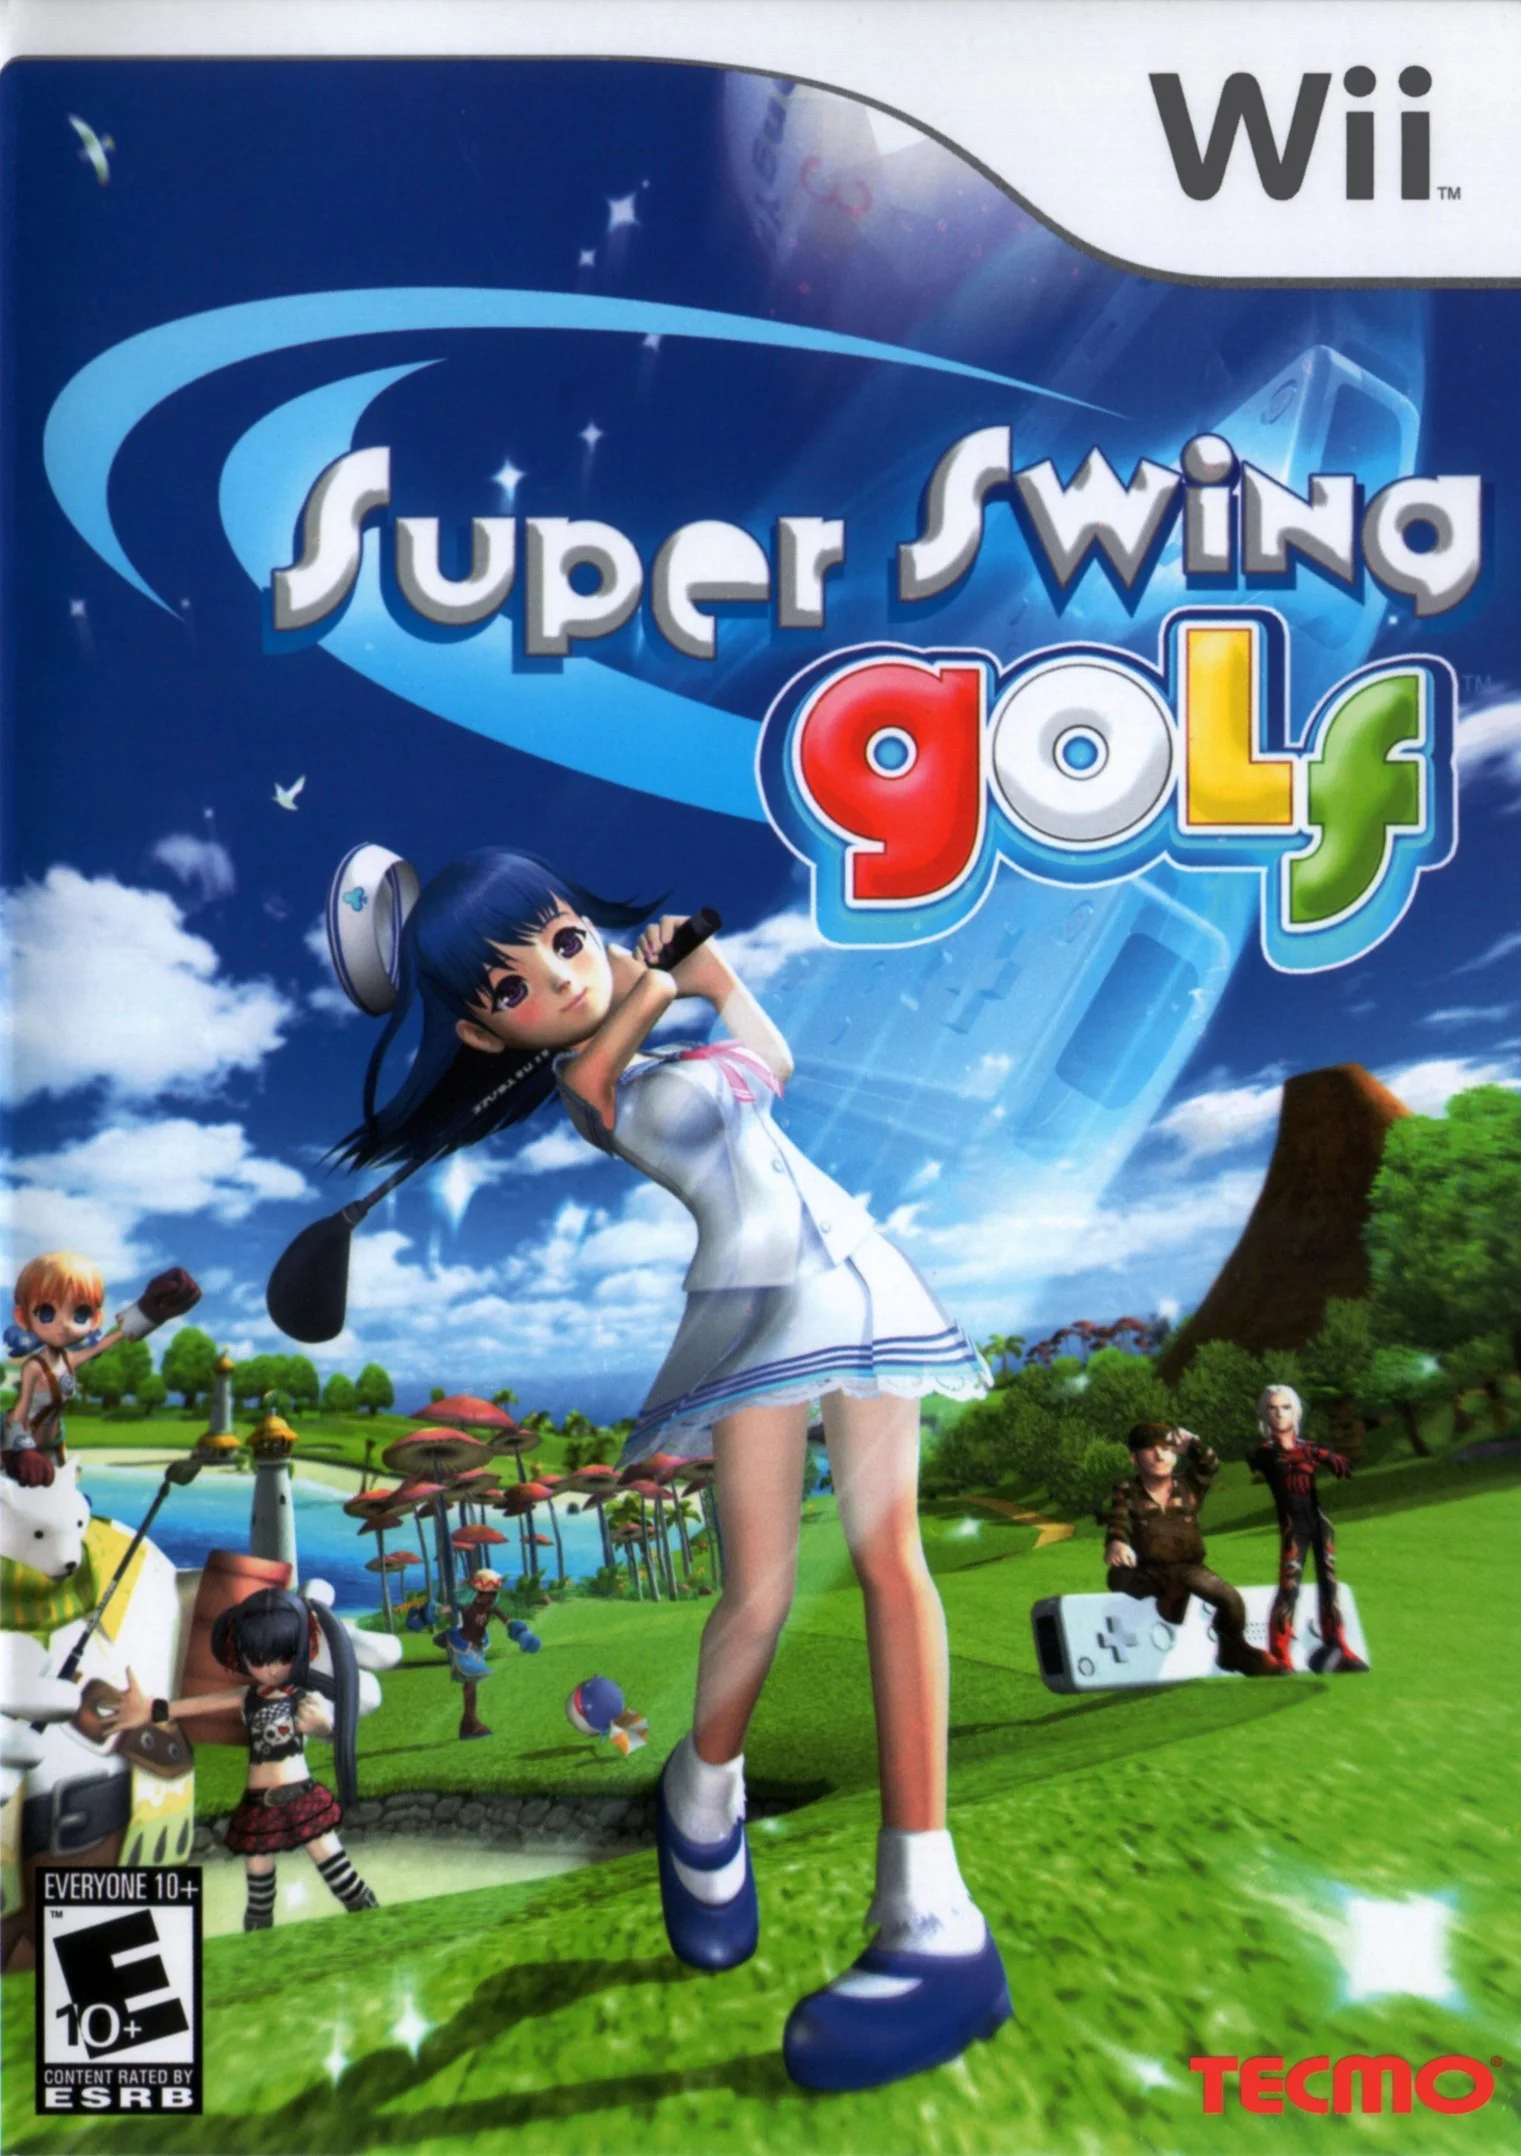 Super Swing Golf